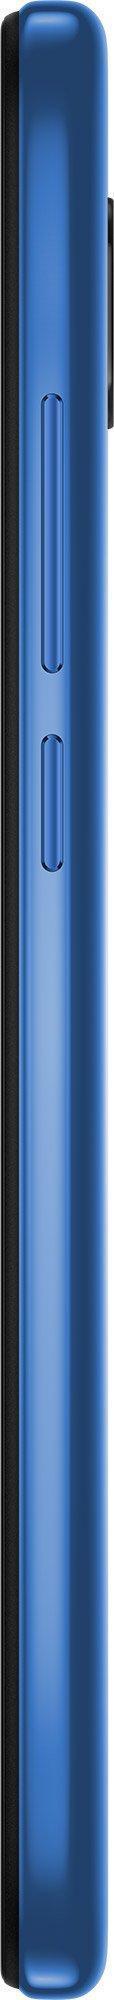 Смартфон Xiaomi Redmi 8 4/64Gb Sapfire Blue заказать